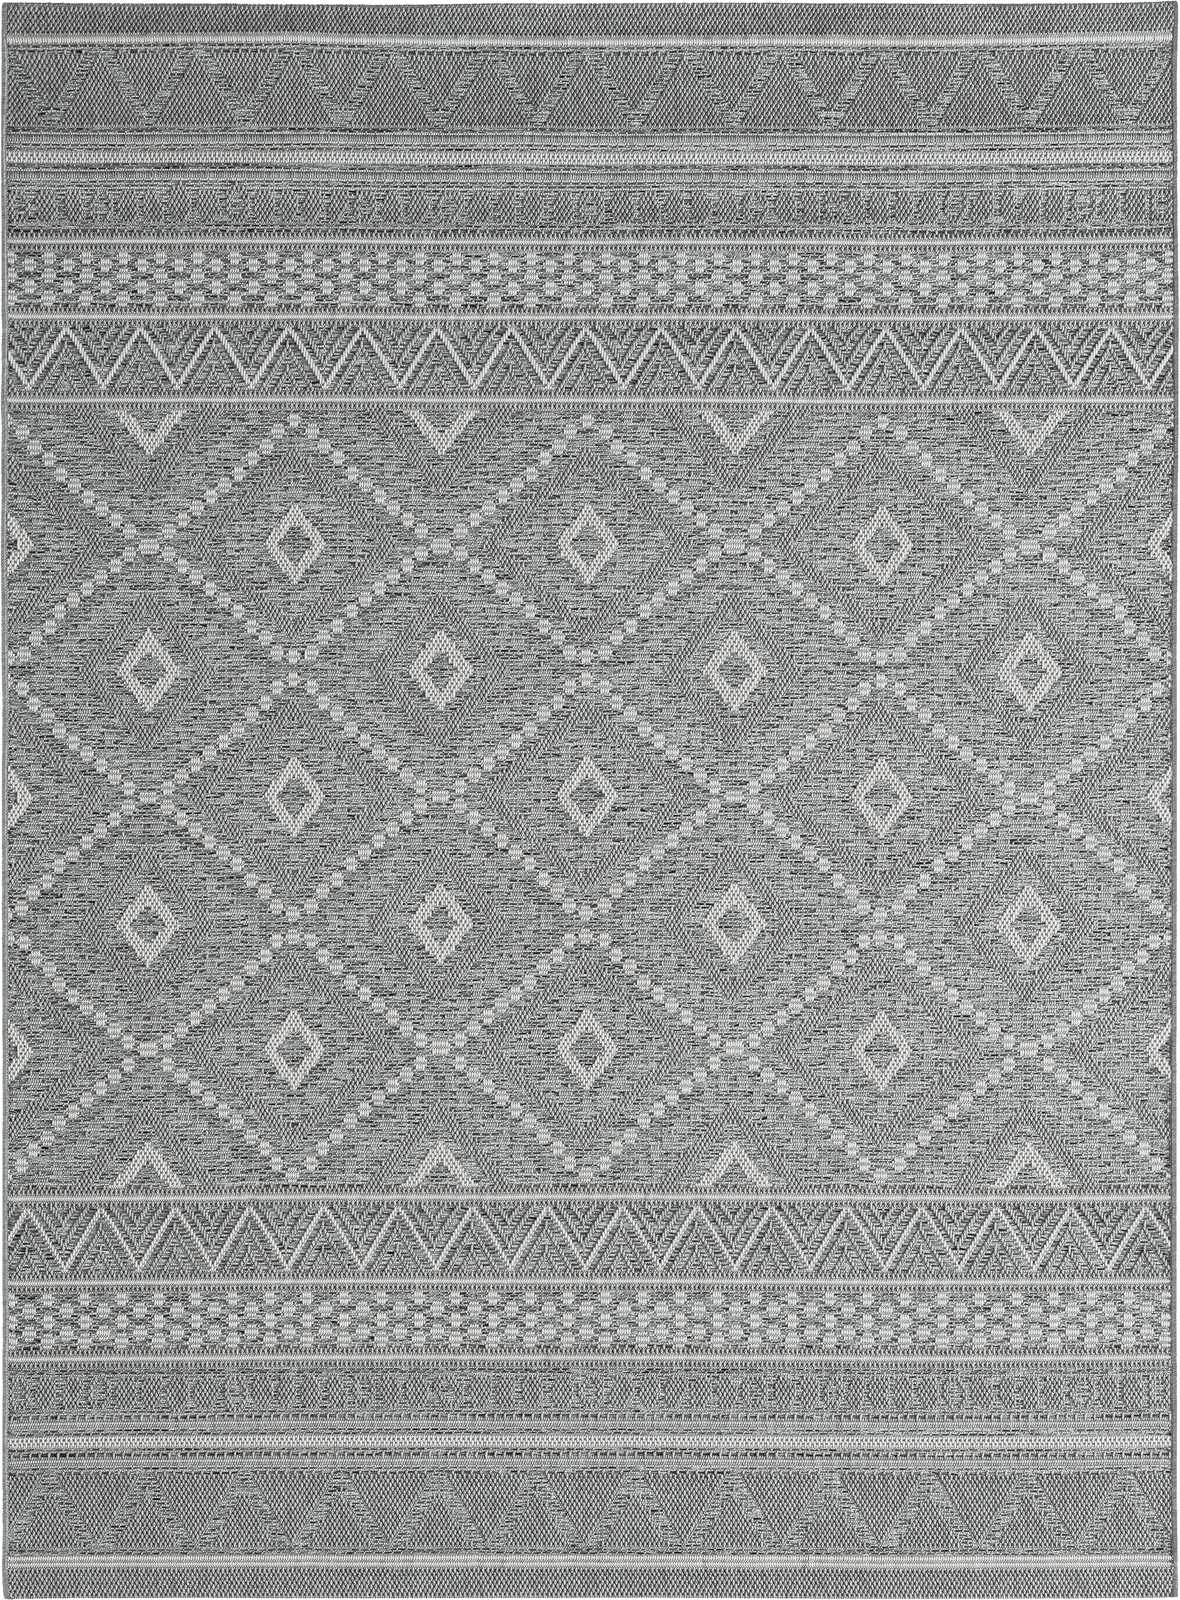             Buitenkleed met patroon in grijs - 150 x 80 cm
        